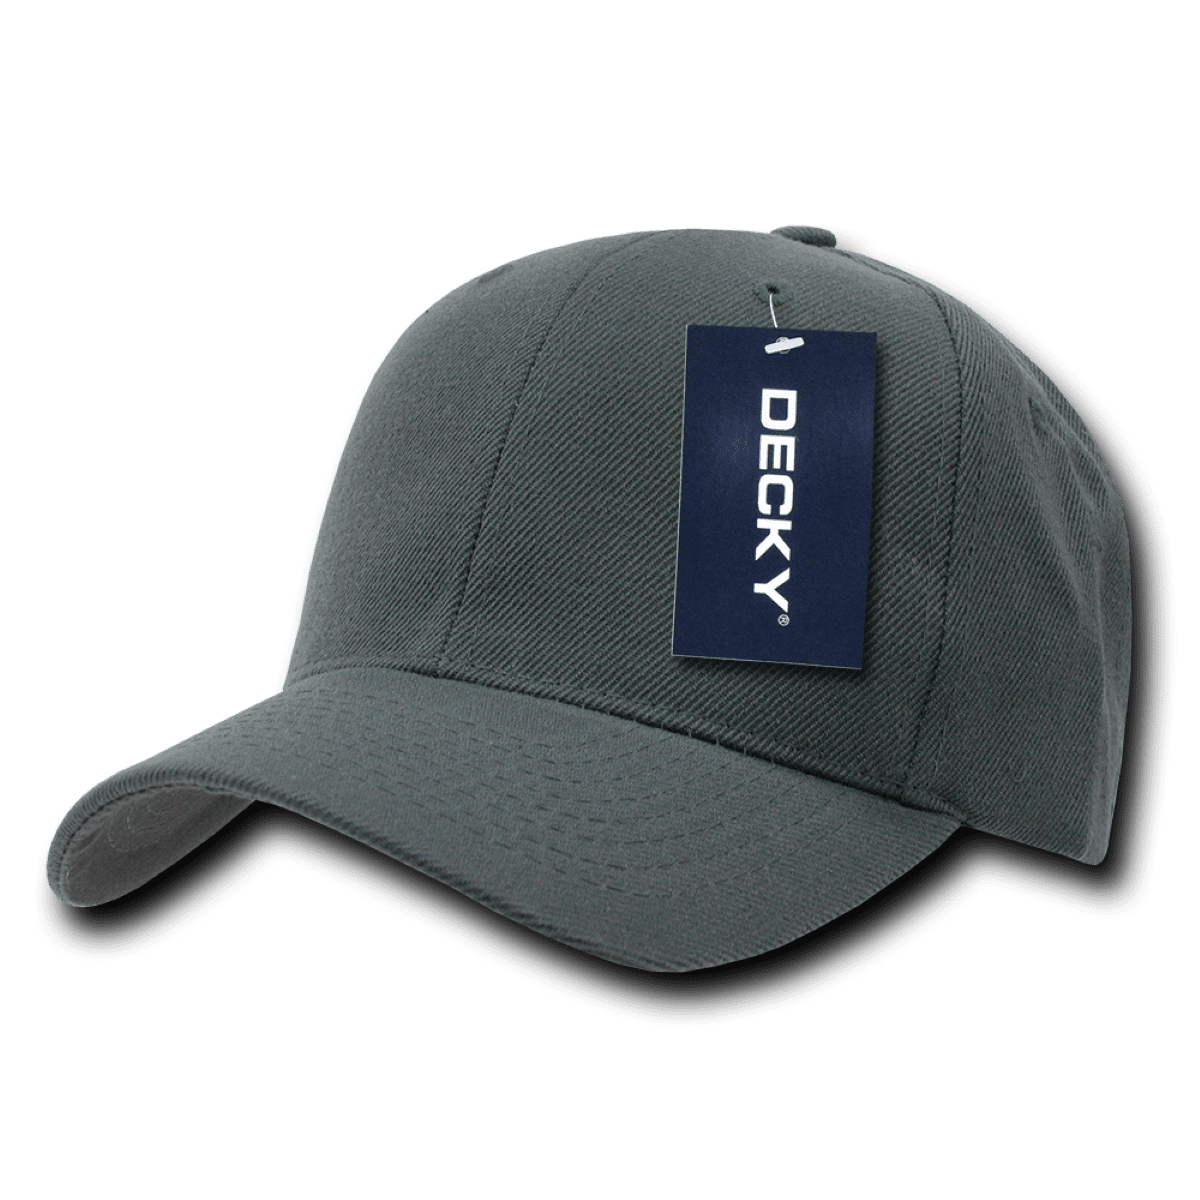 DECKY Deluxe Baseball Cap